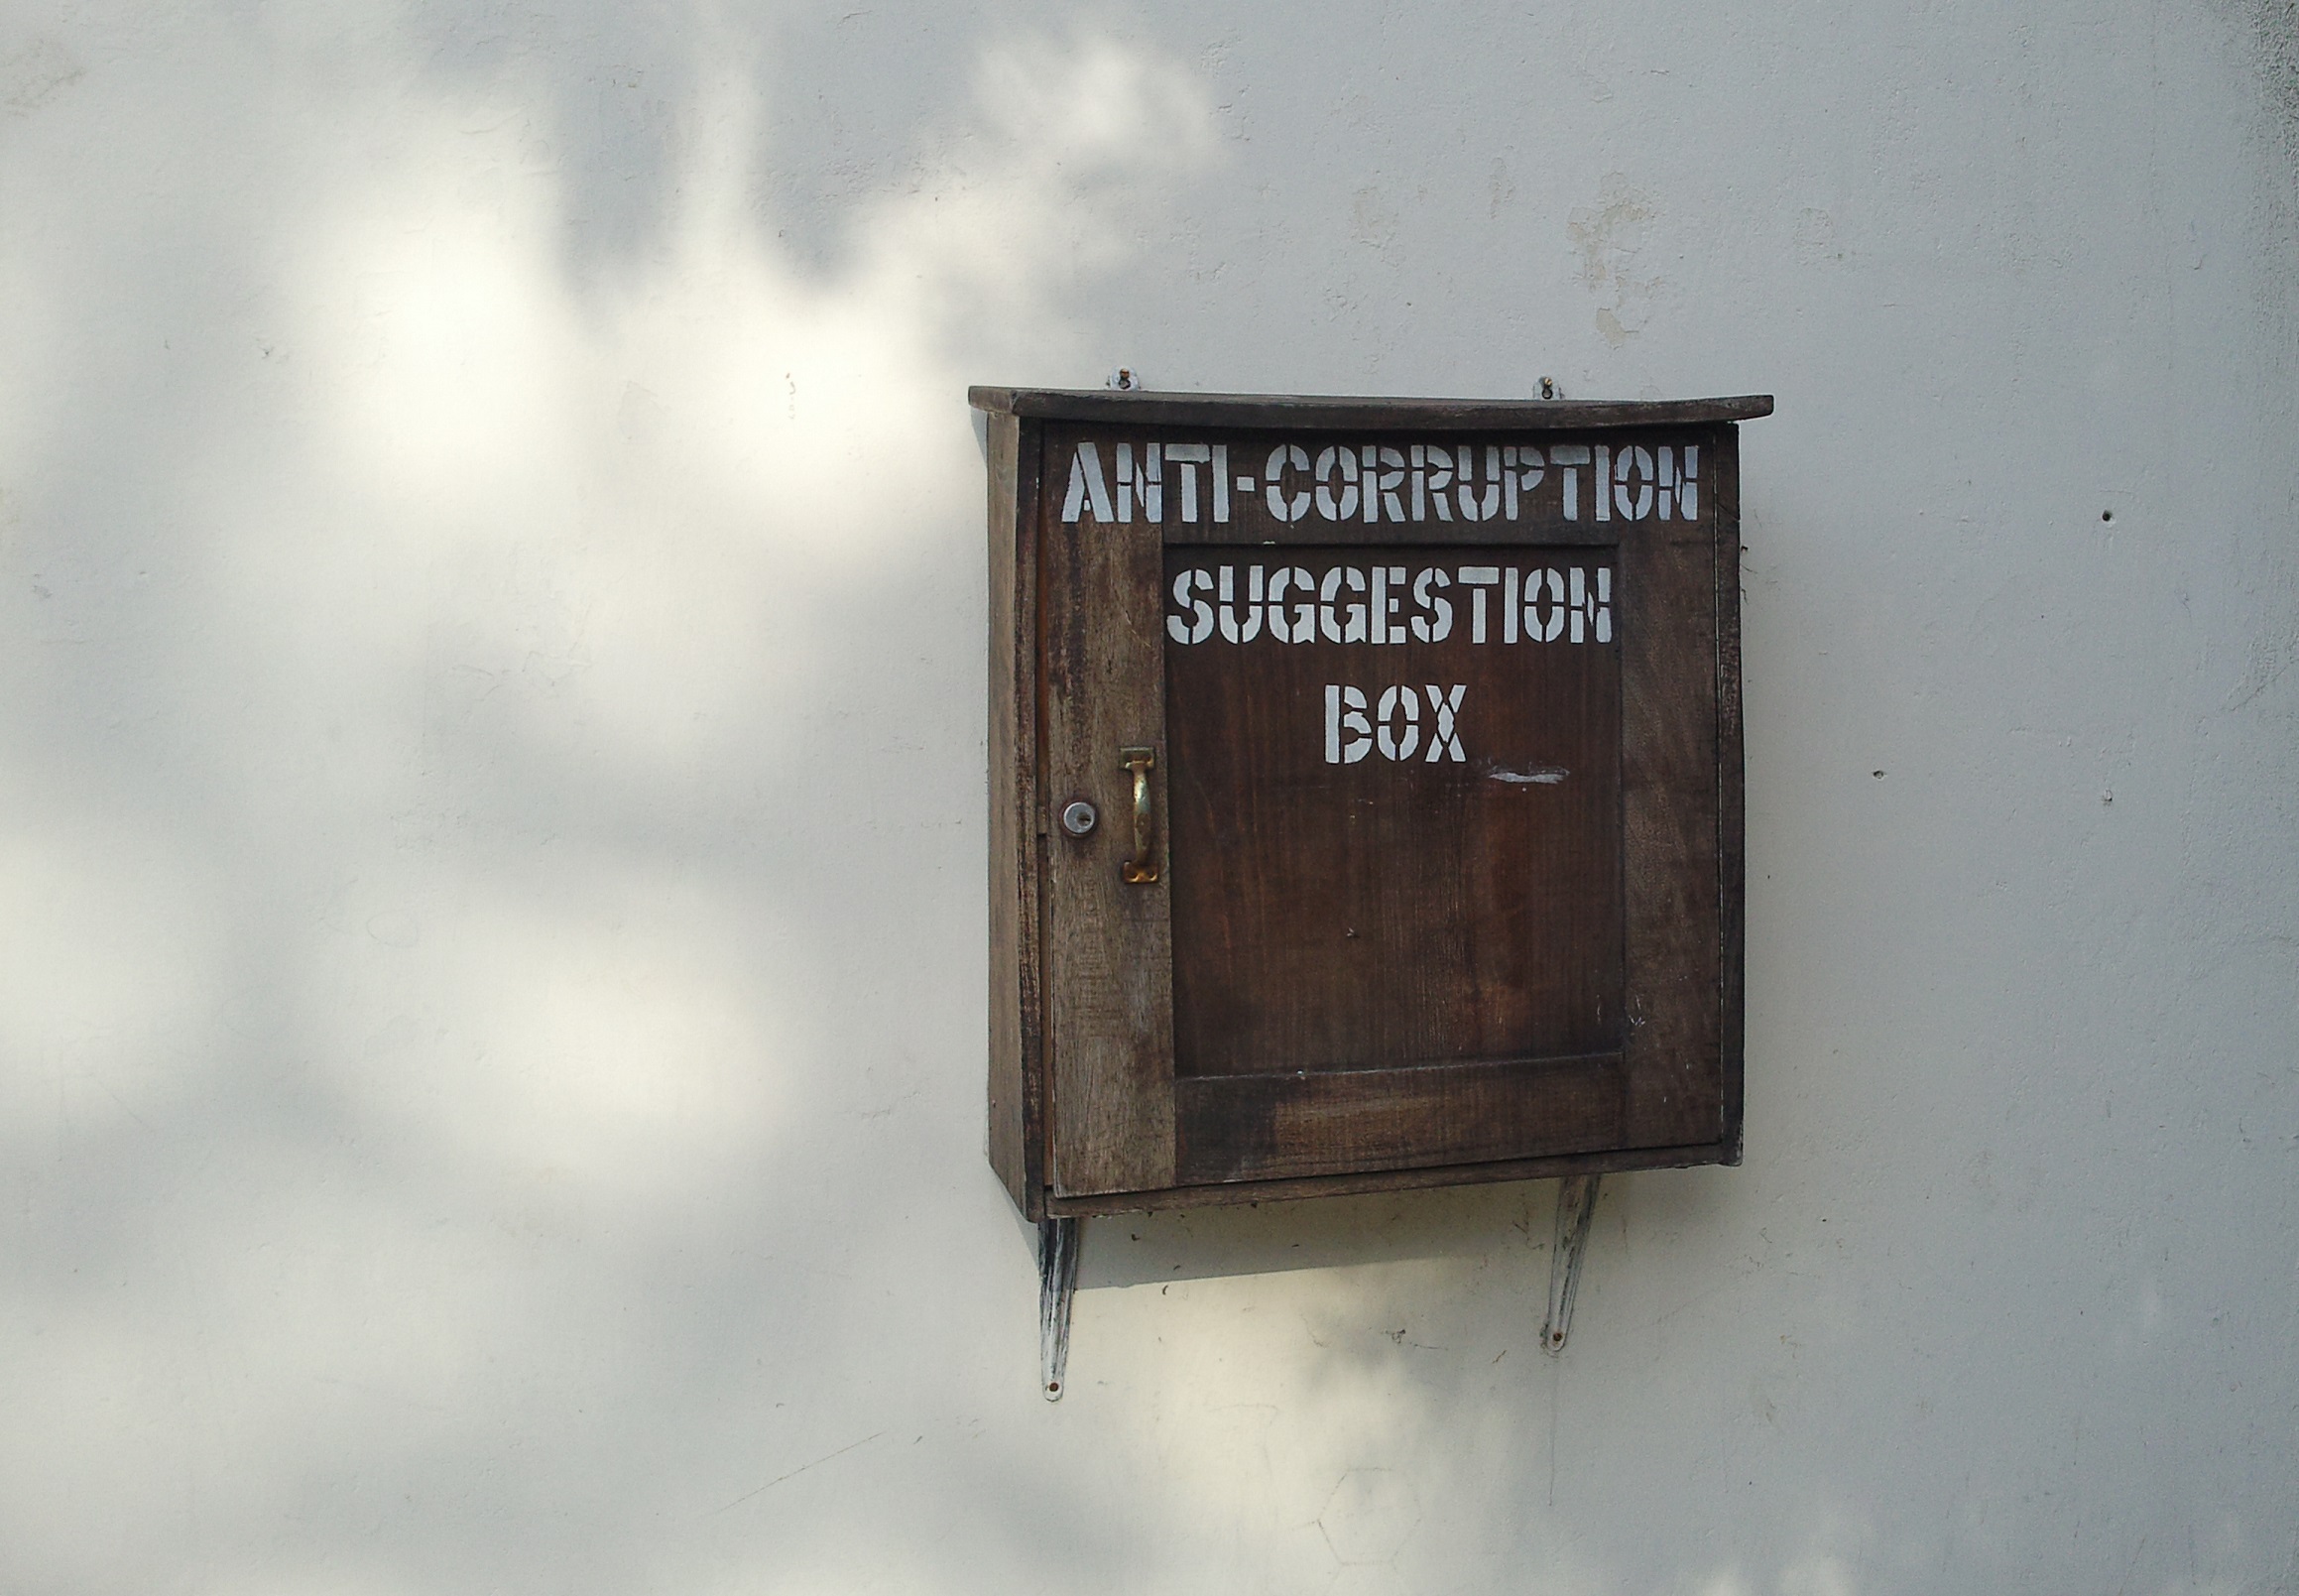 Anti-corruption suggestion box